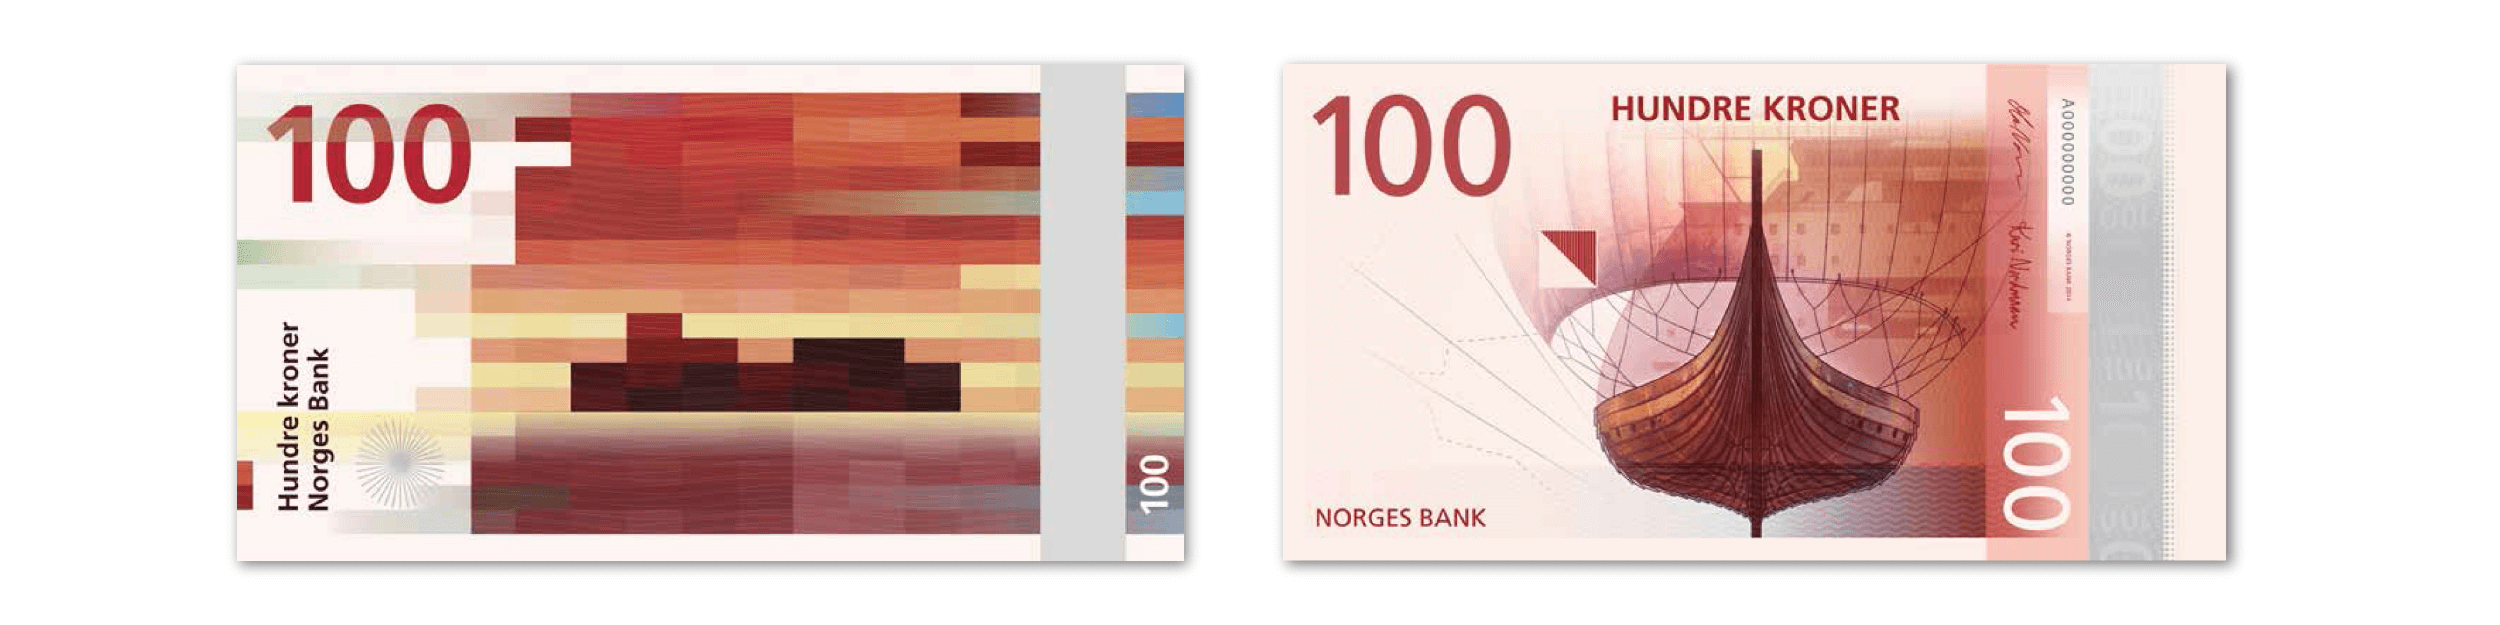 Norway Currency Redesign_100-kroner